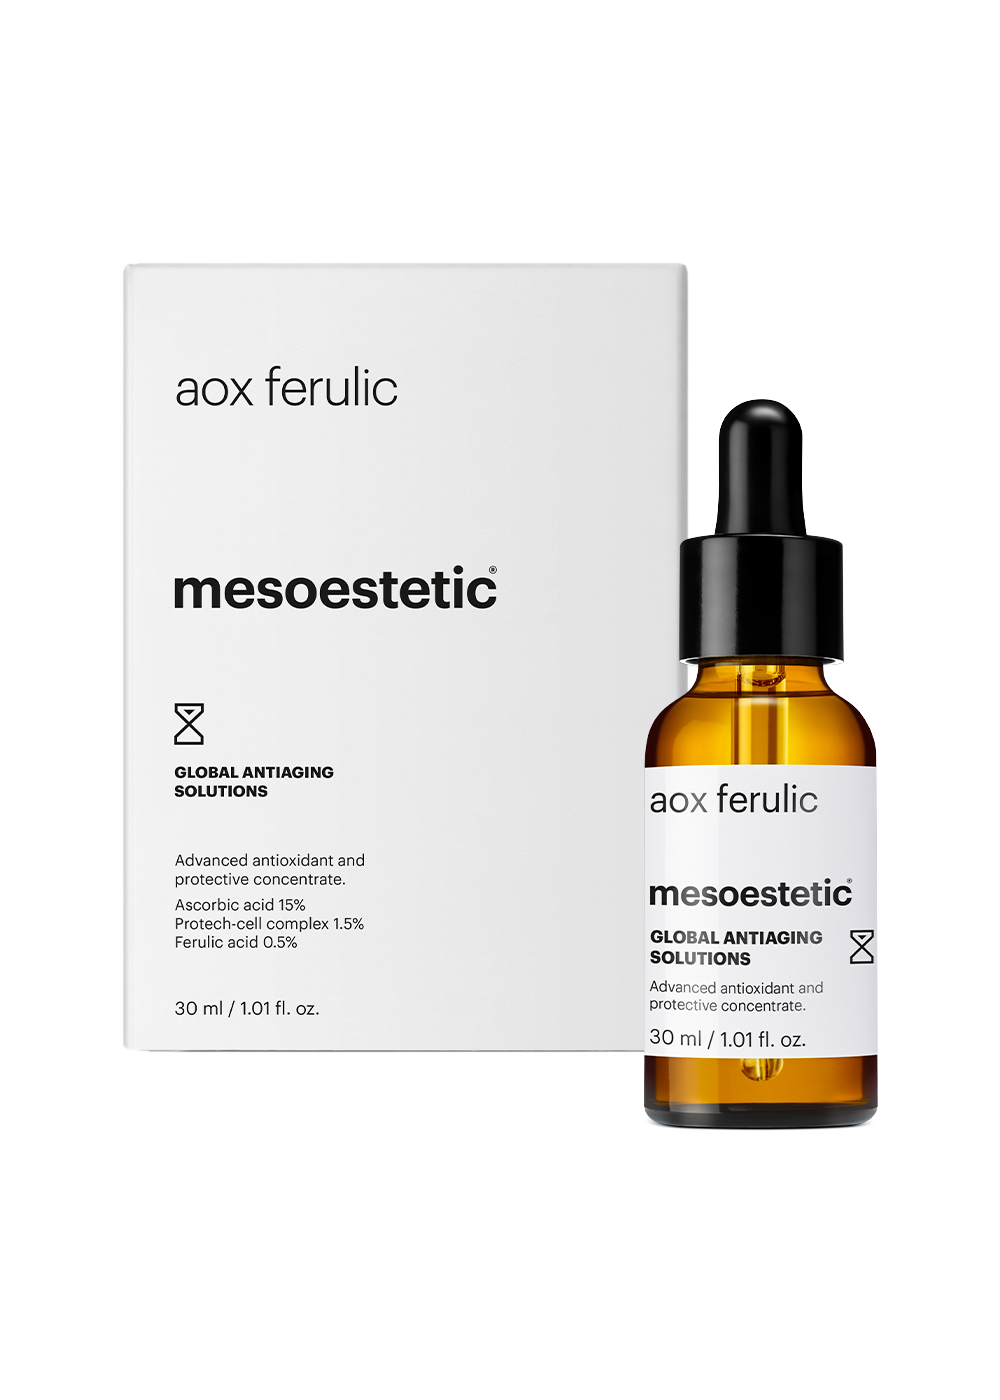 Mesoestetic AOX Ferulic Serum